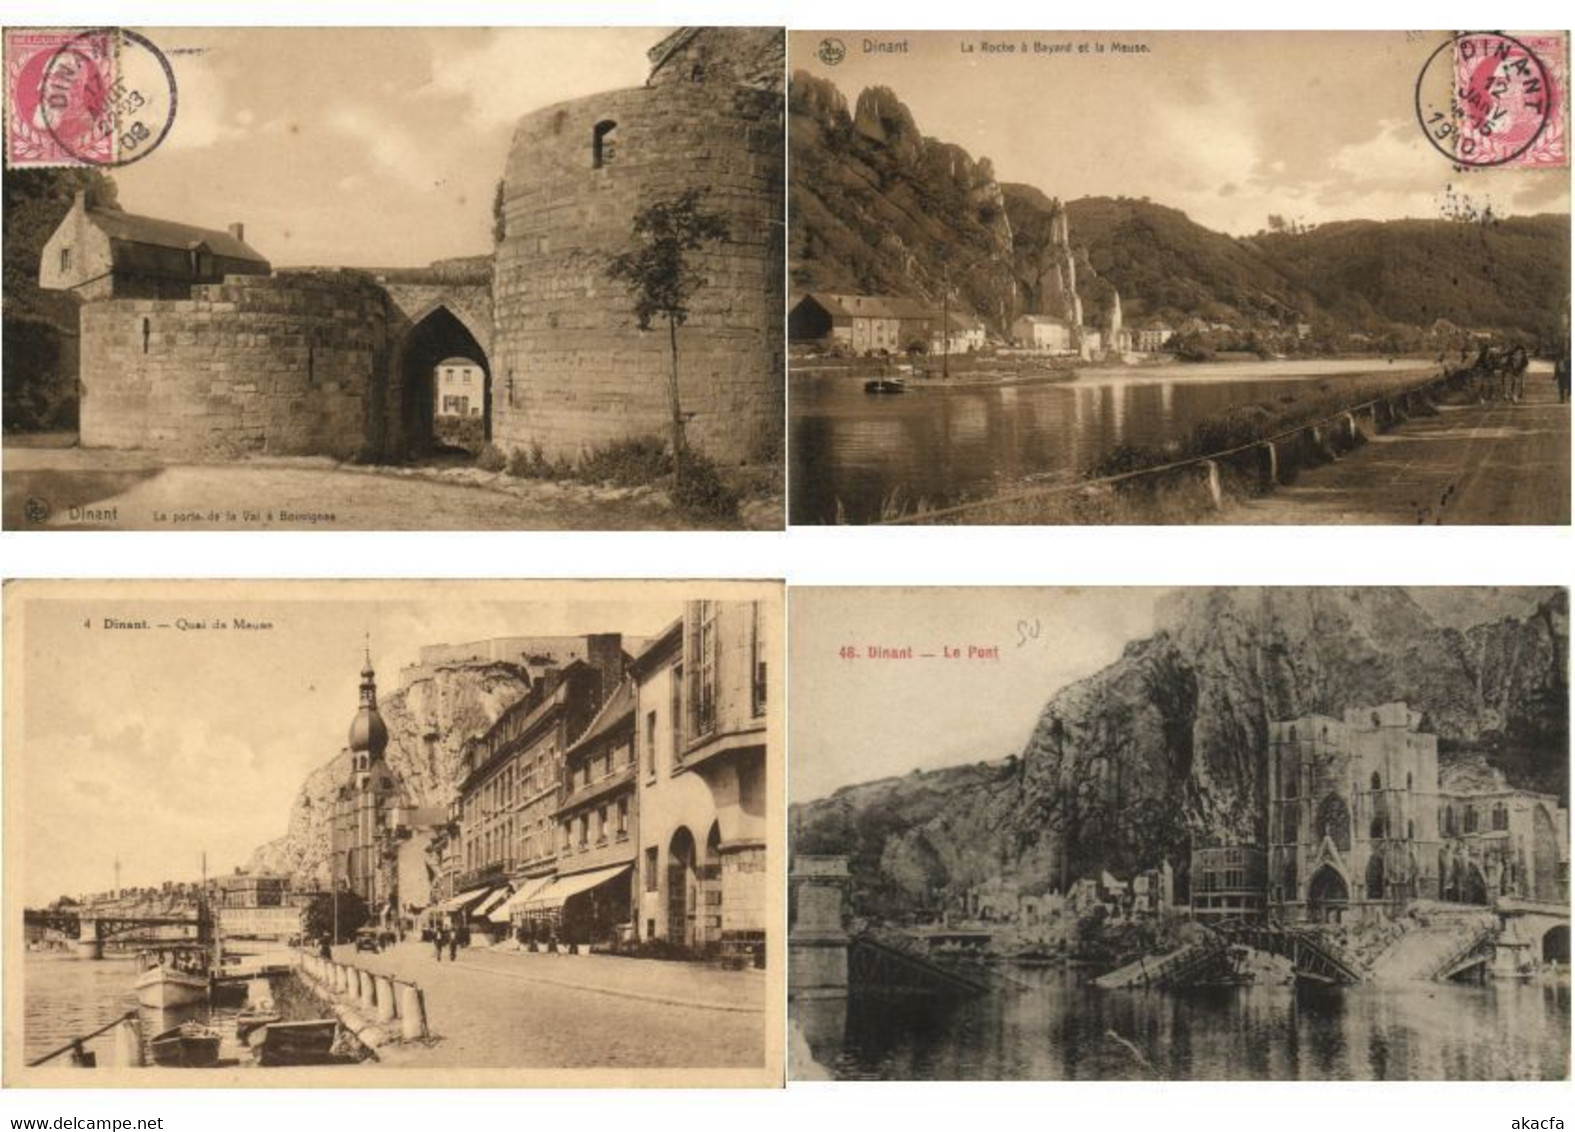 DINANT BELGIUM 67 Vintage Postcards Mostly Pre-1940 (L3536) - Sammlungen & Sammellose